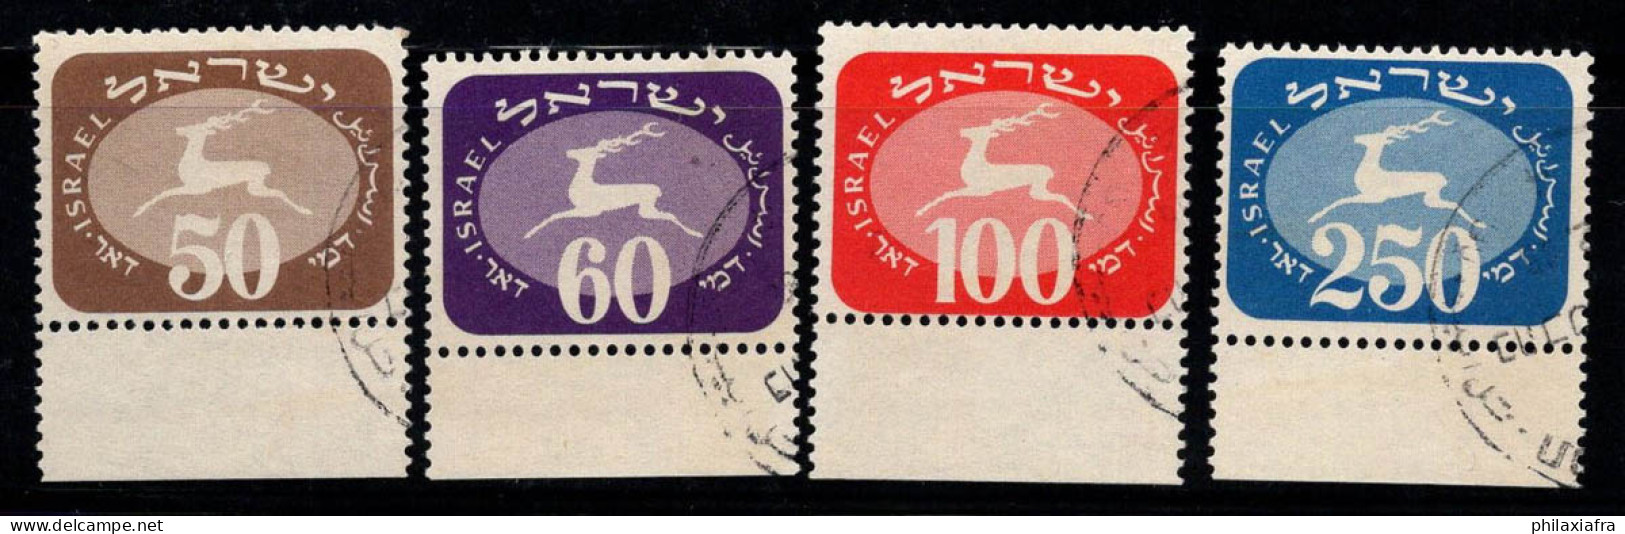 Israël 1952 Mi. 17-20 Oblitéré 100% Timbre-taxe Faune, Cerf - Postage Due